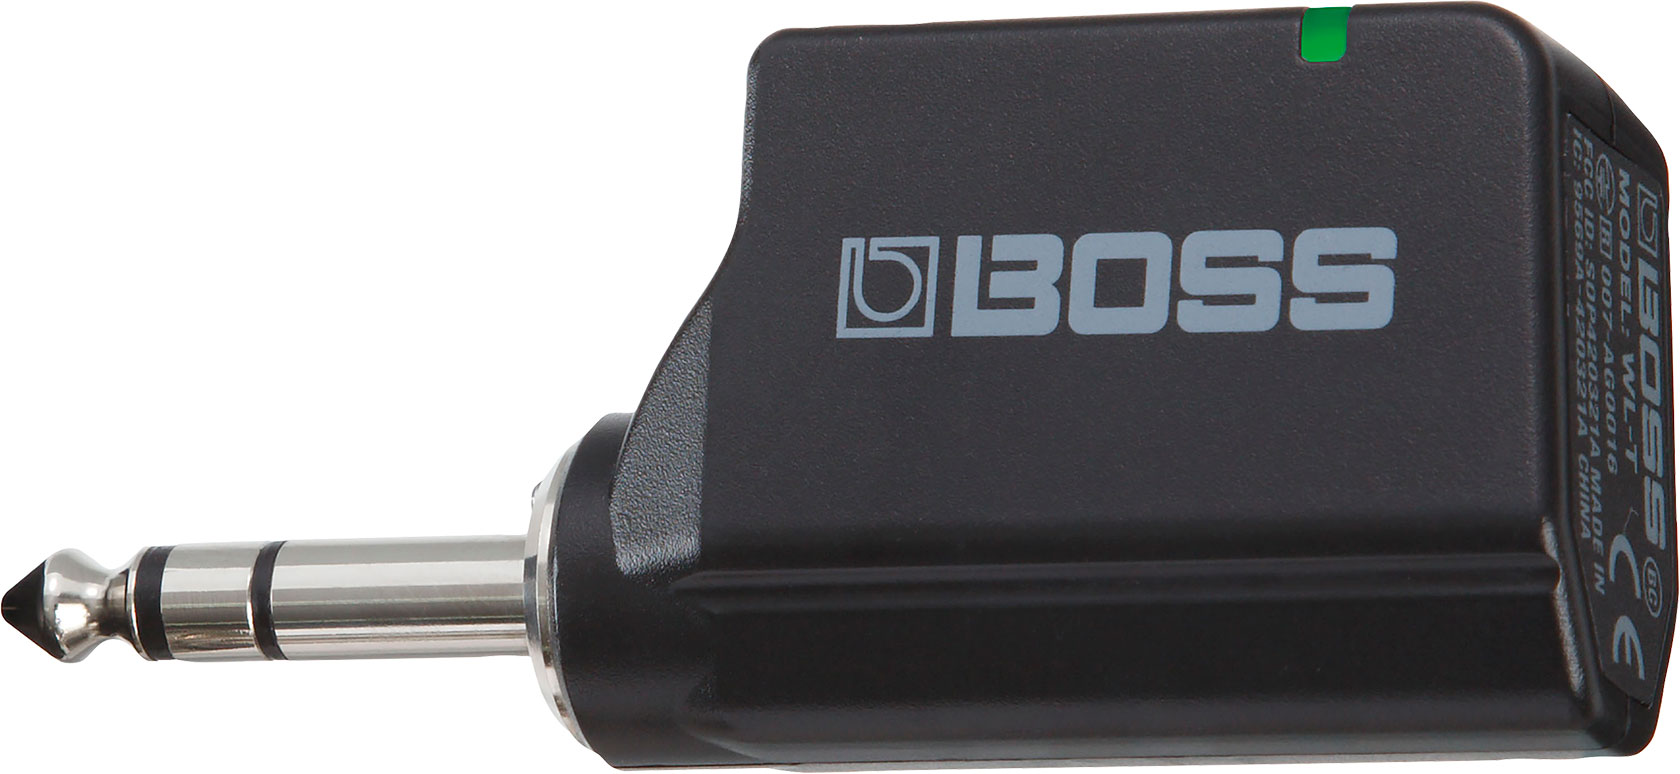 Boss Wl-t Wireless Transmitter - Wireless Audiosender - Variation 1